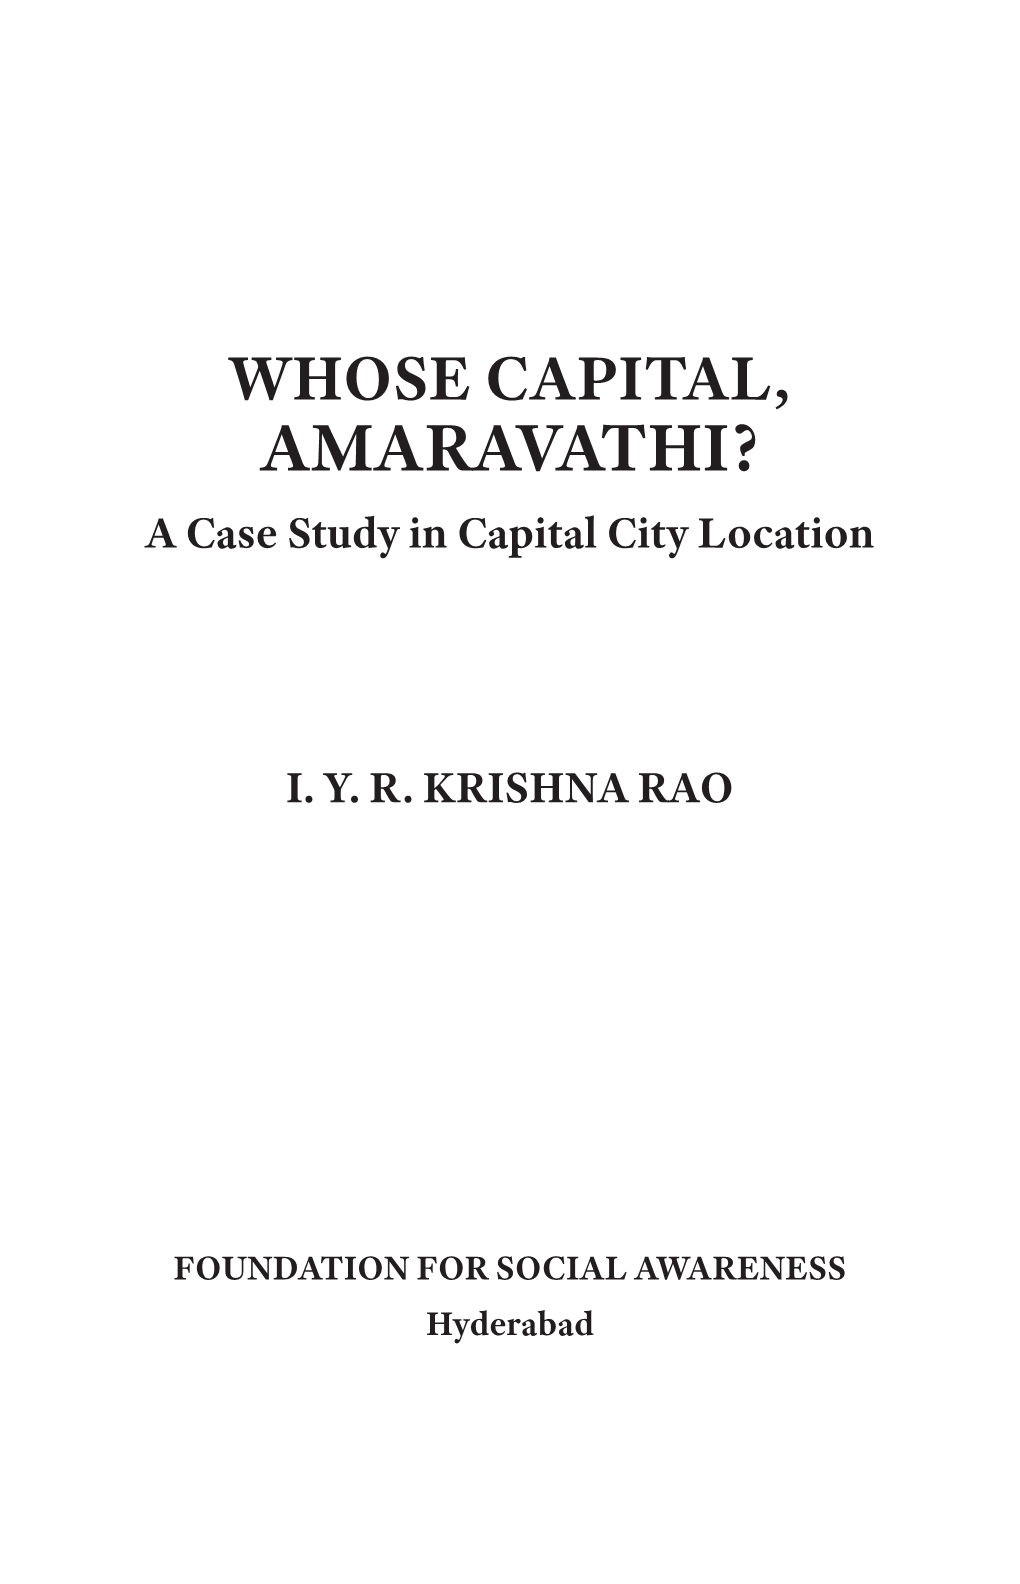 AMARAVATHI? a Case Study in Capital City Location